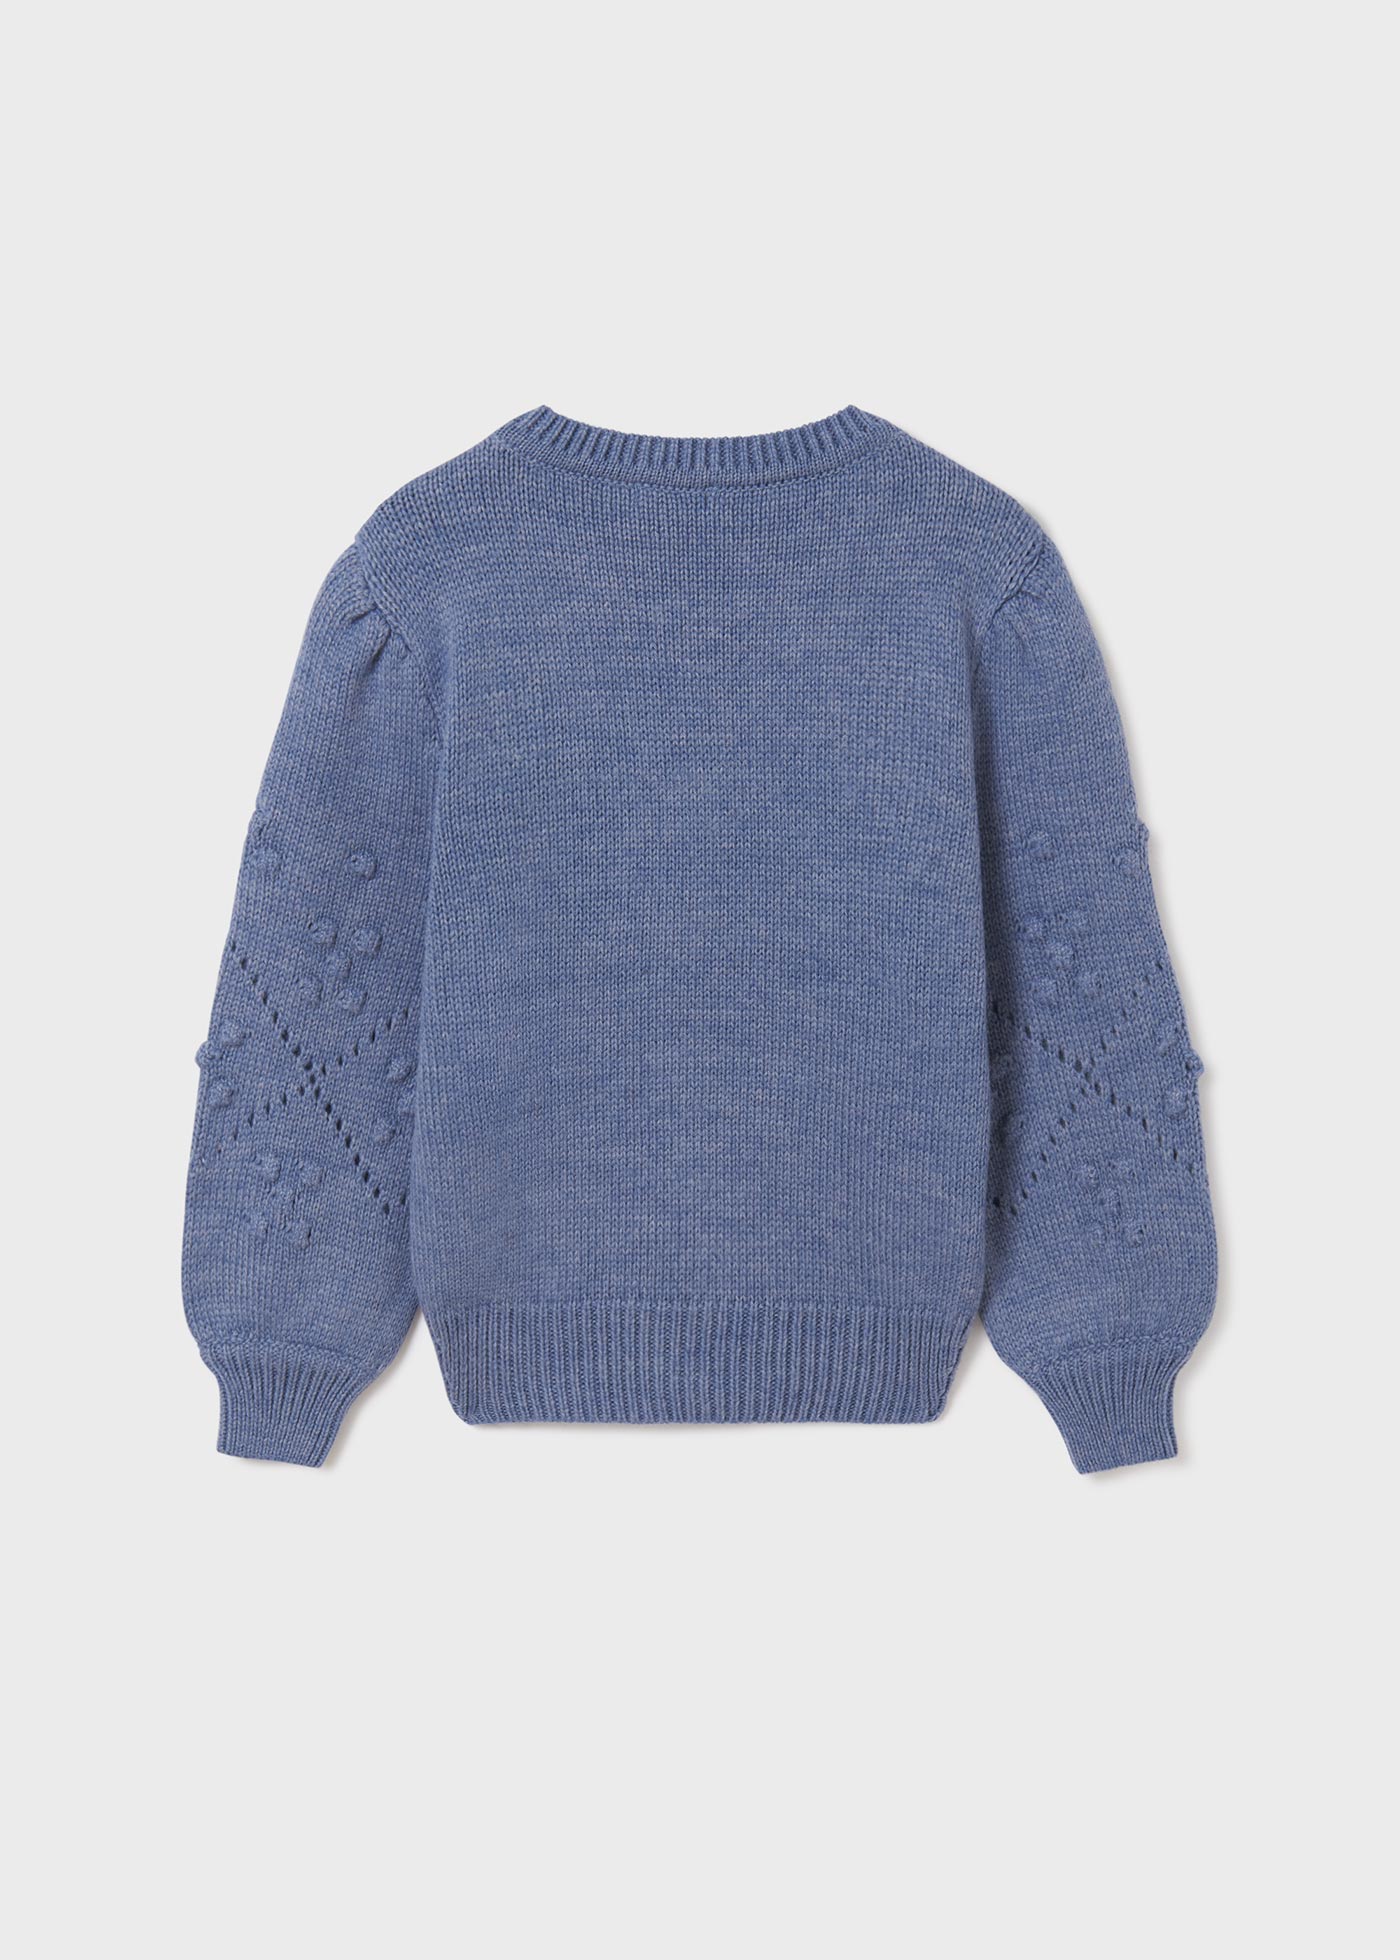 Pom Pom Sweater- Indigo